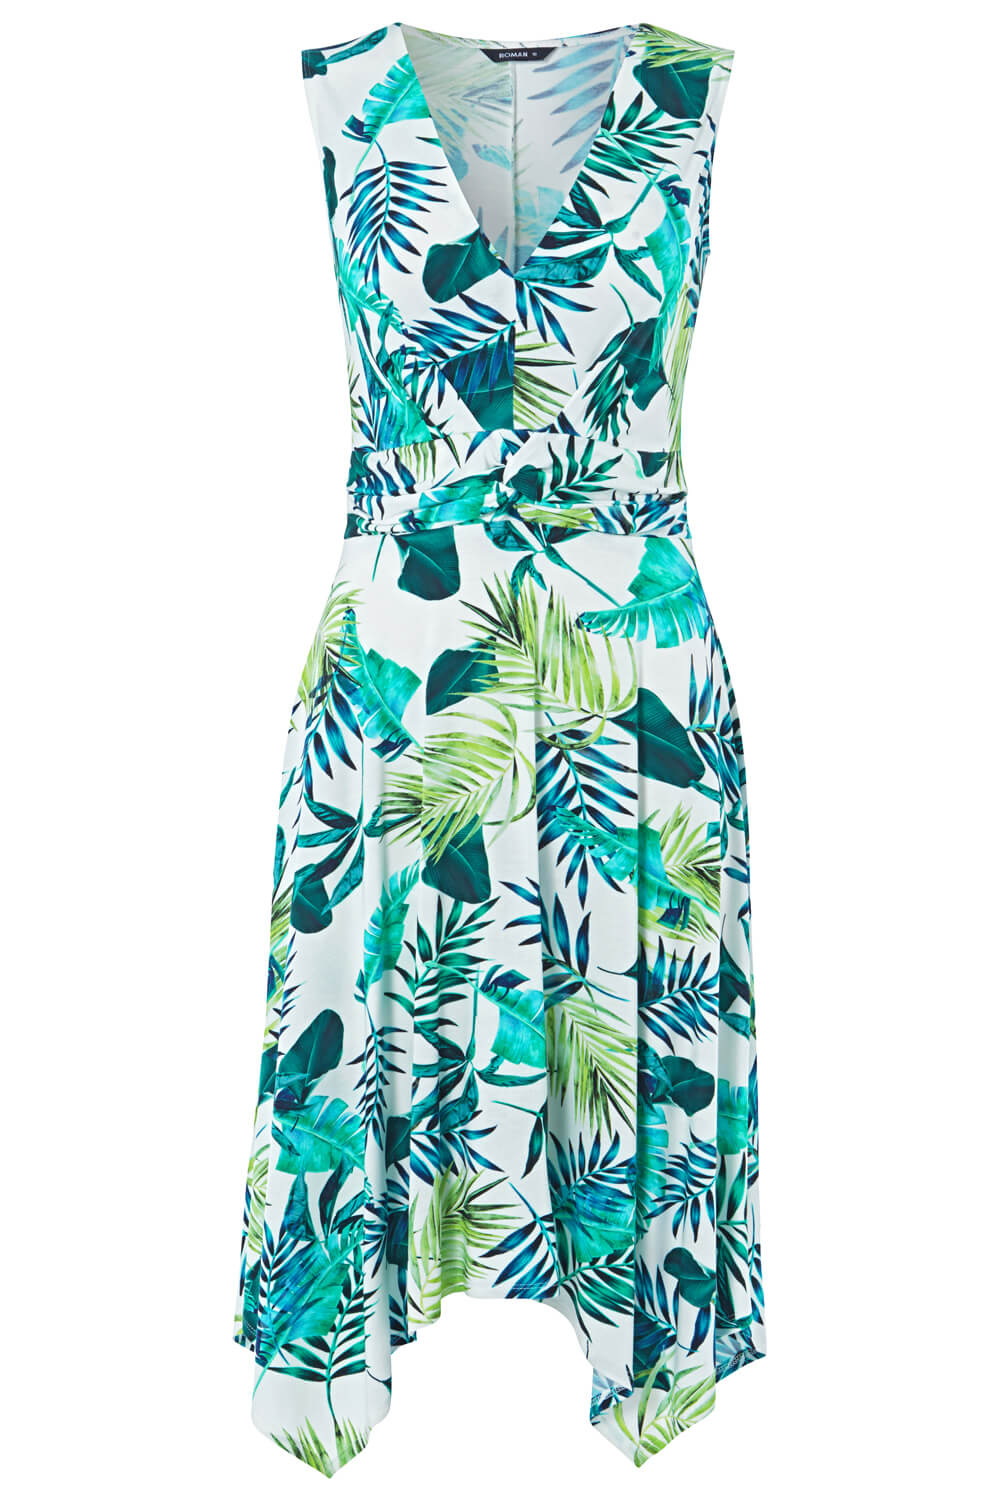 Palm Print Twist Front Dress in Green - Roman Originals UK